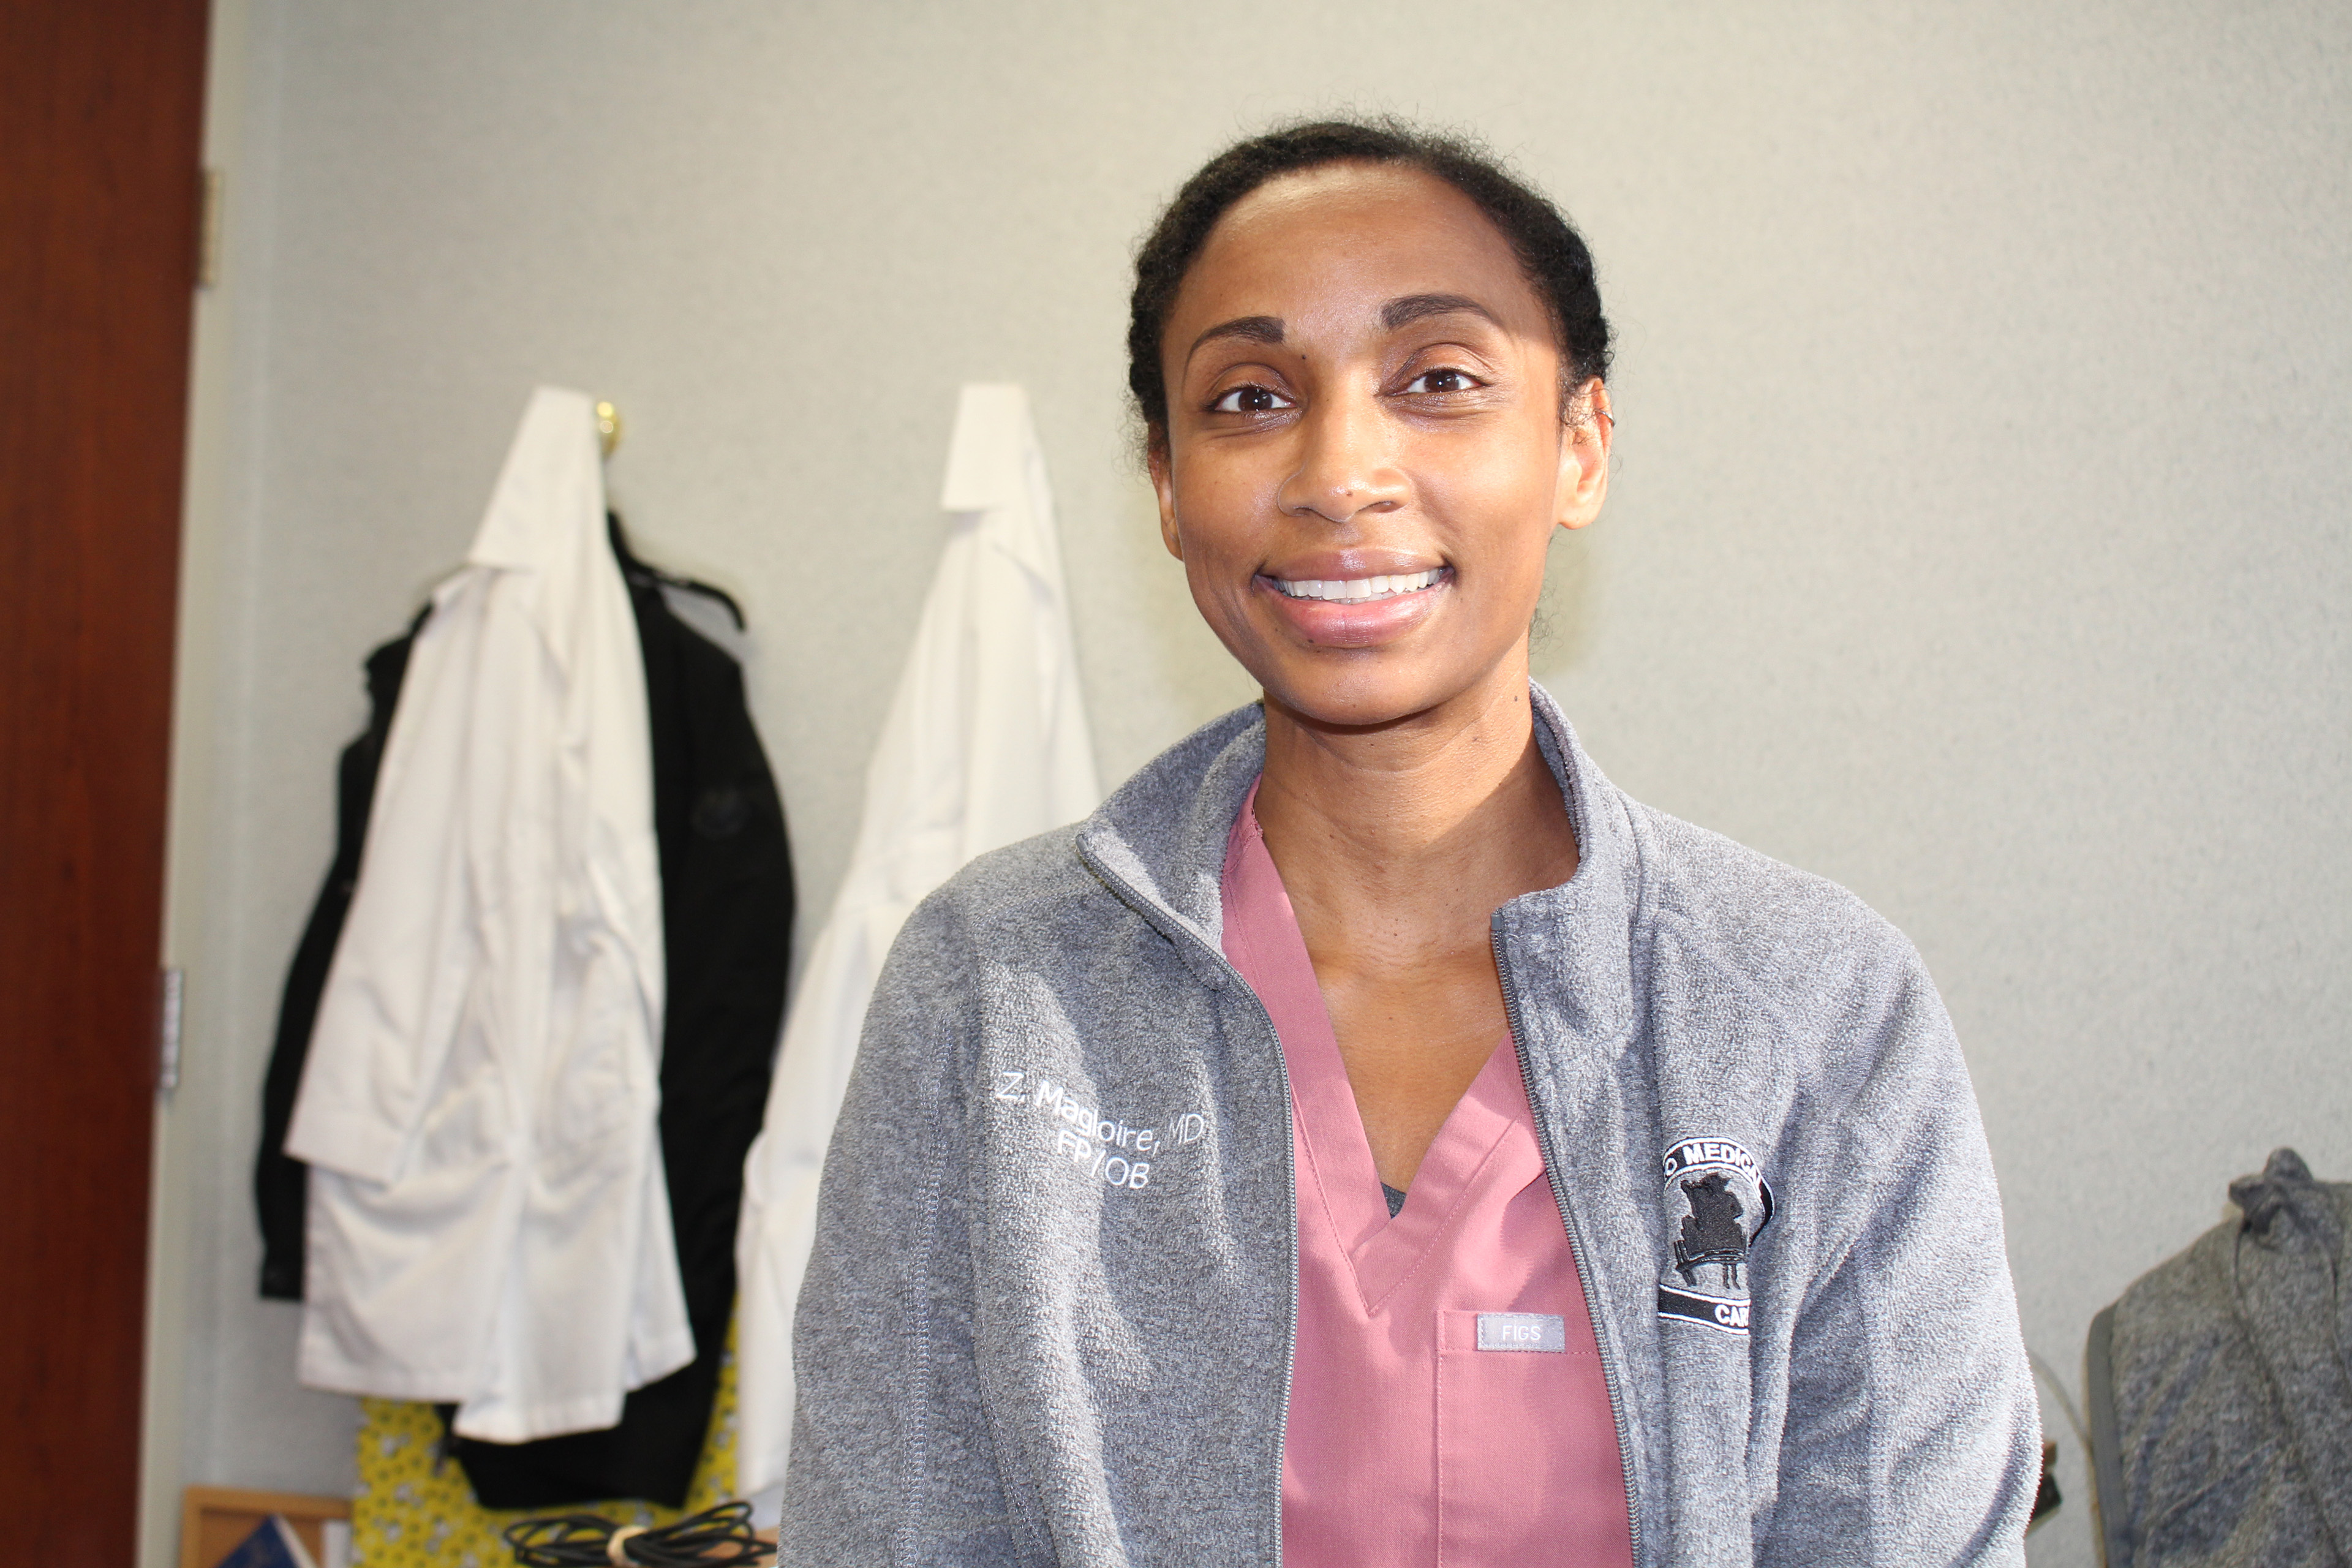 Zita Magloire, wearing hospital scrubs and a fleece jacket, smiles towards the camera.